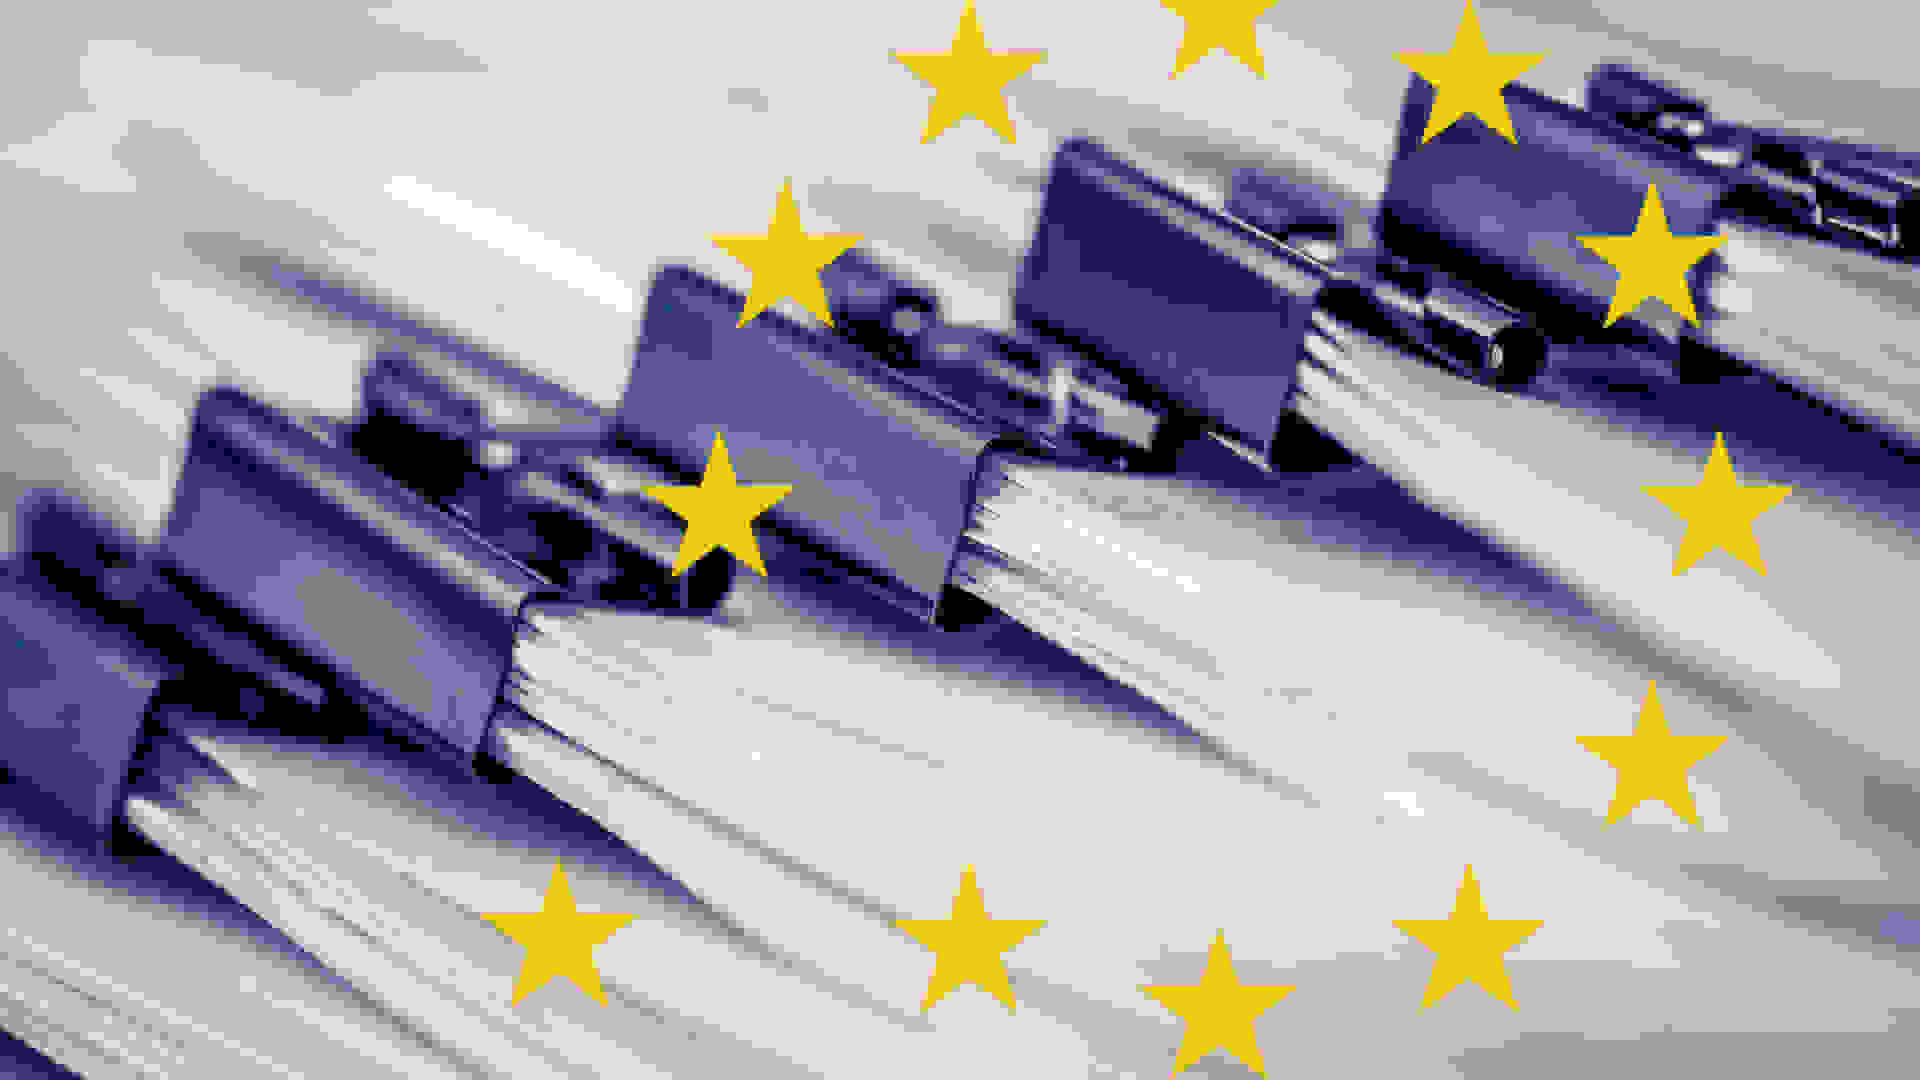 EU stars and documents